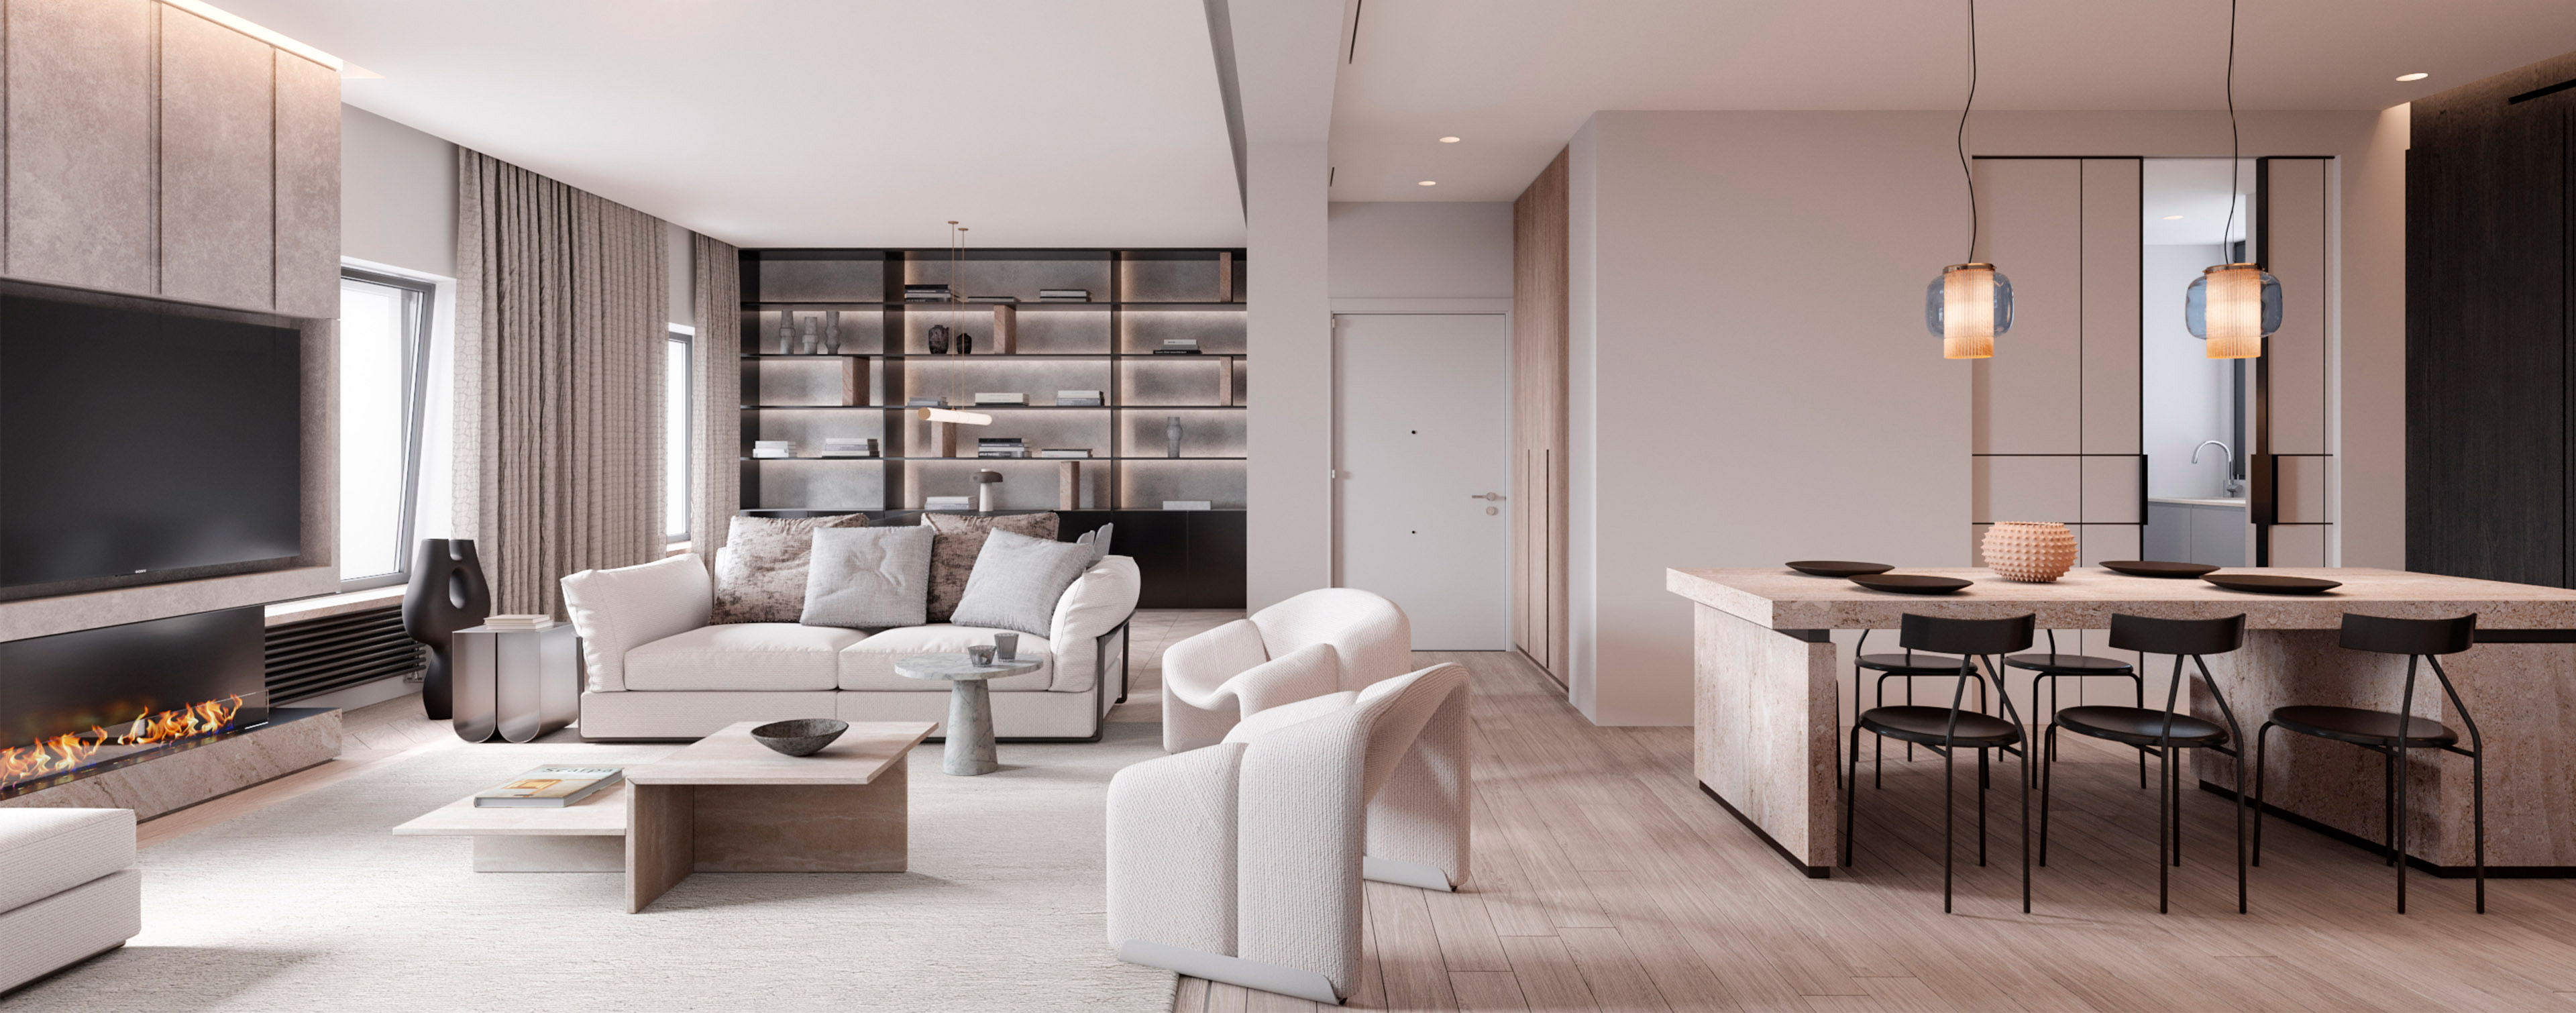 Luv studio luxury architects madrid almagro apartment IMG  - Zurbano Apartment 